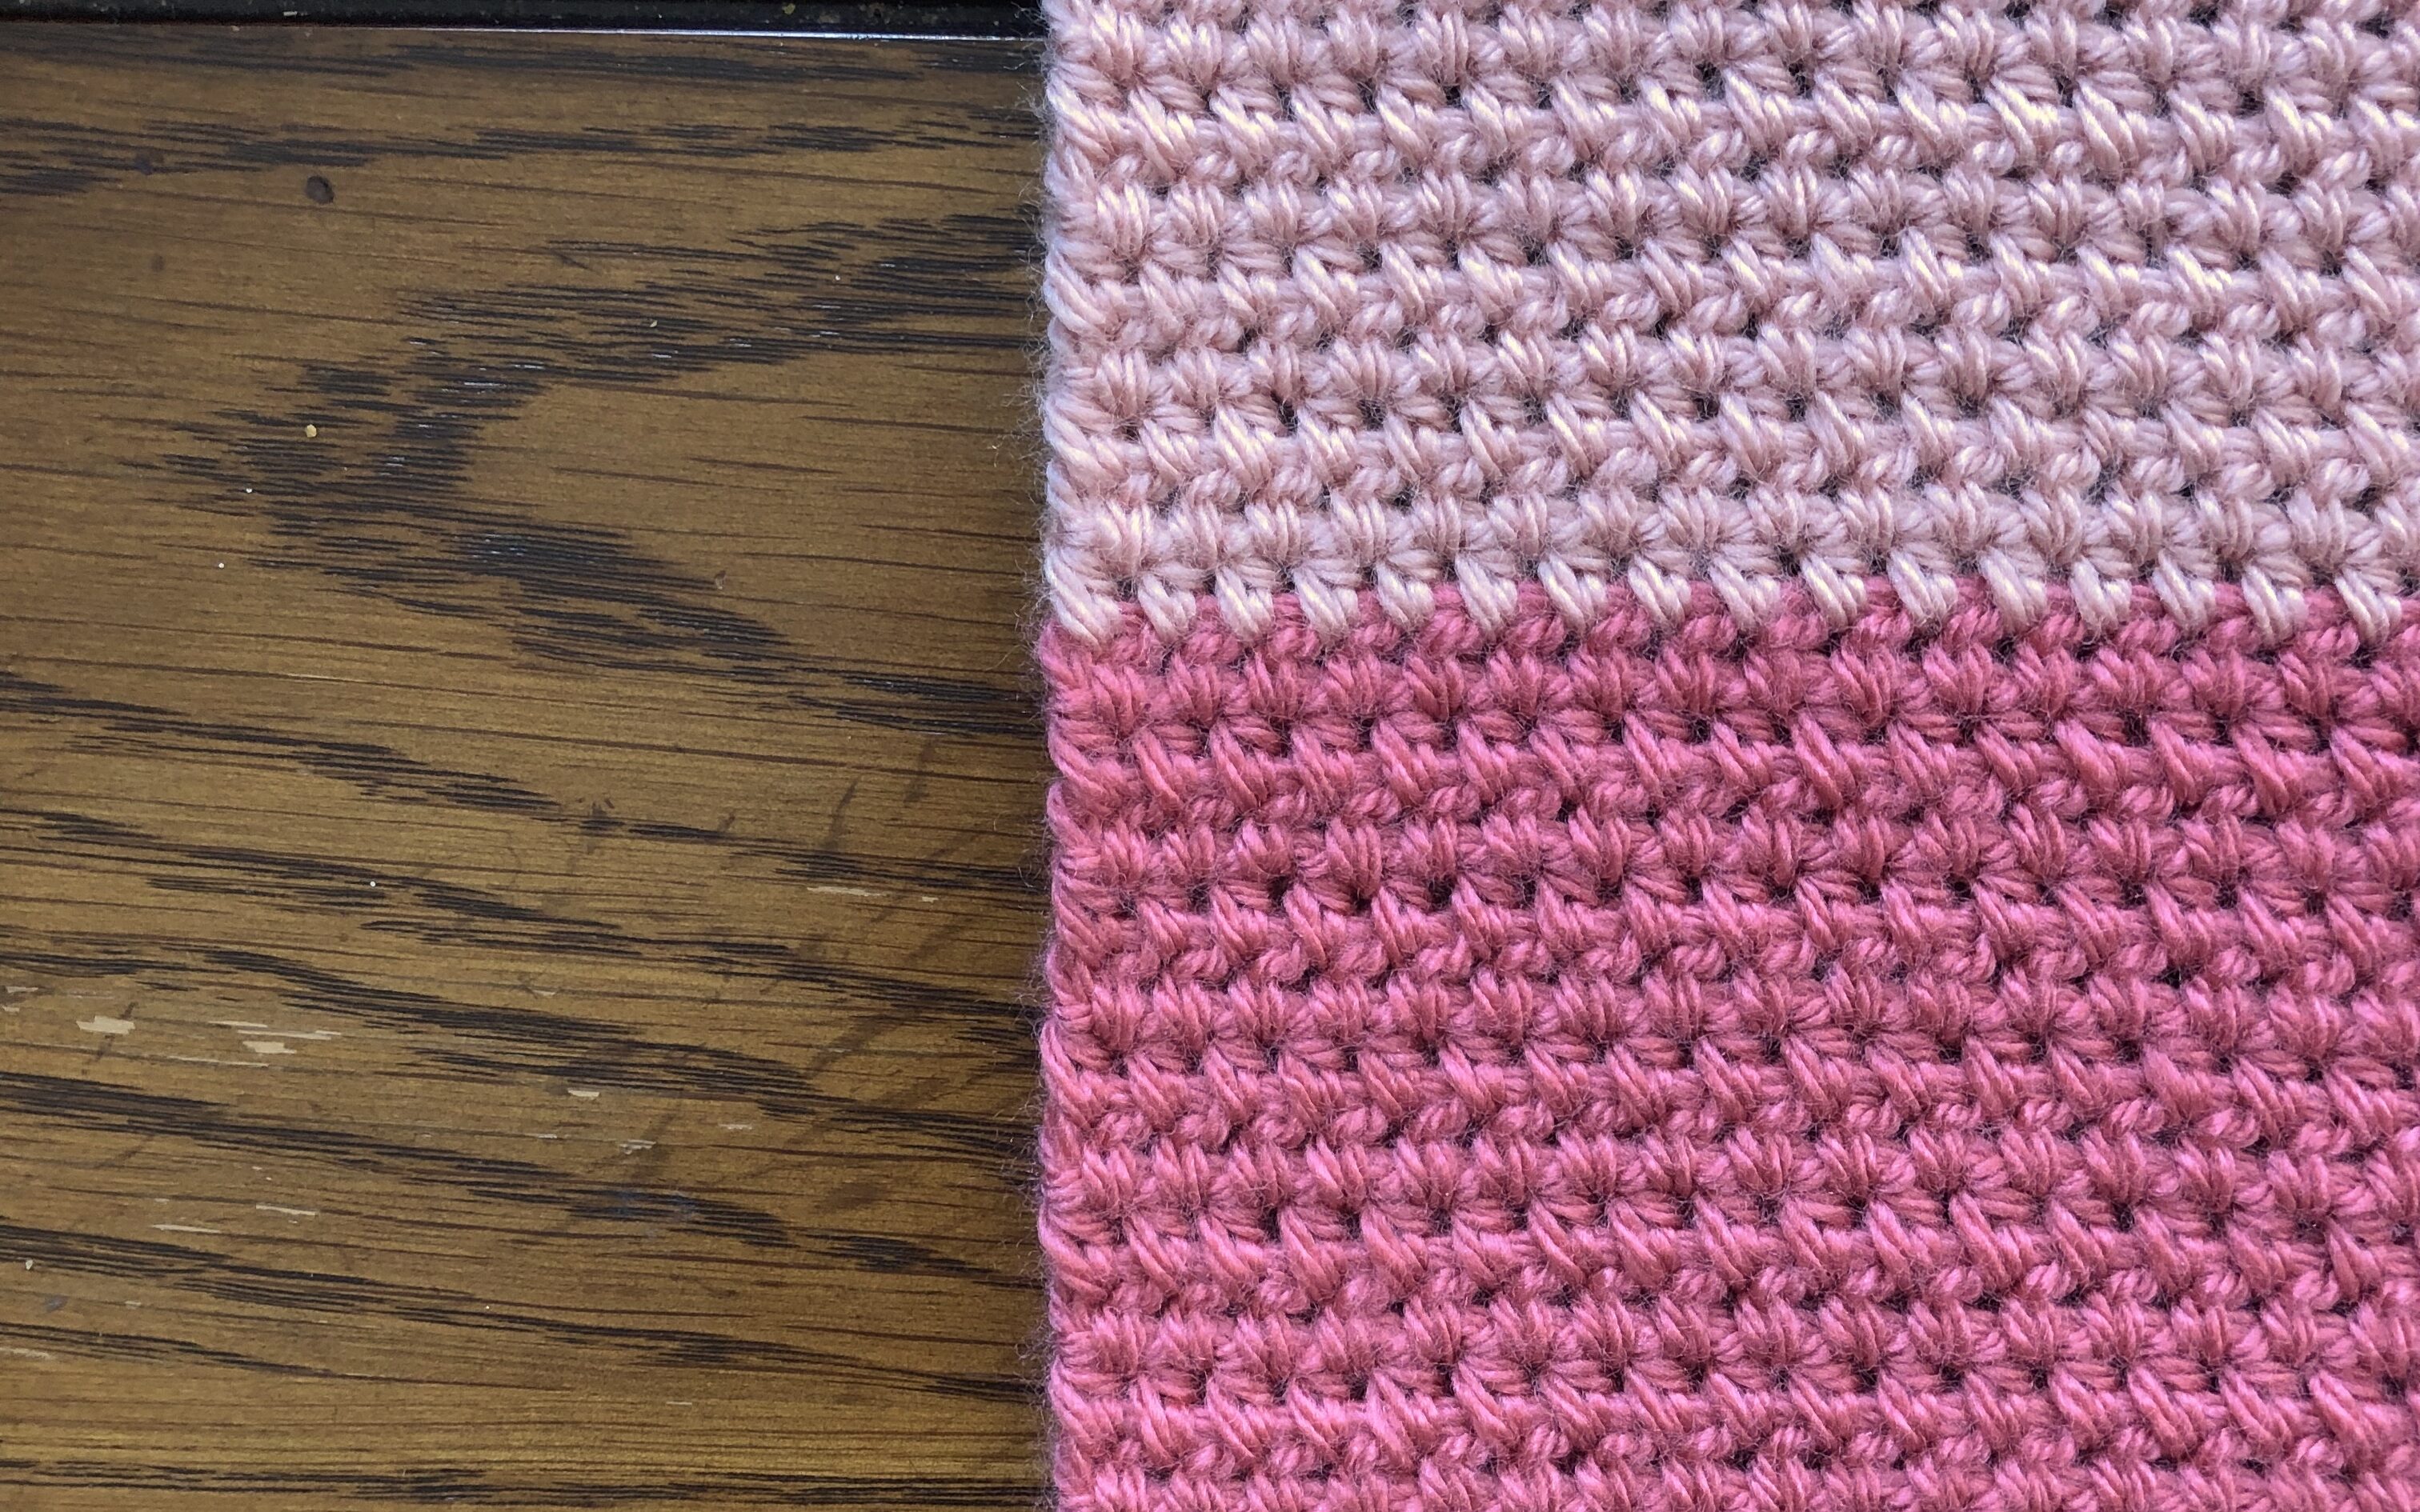 how to crochet straight edges